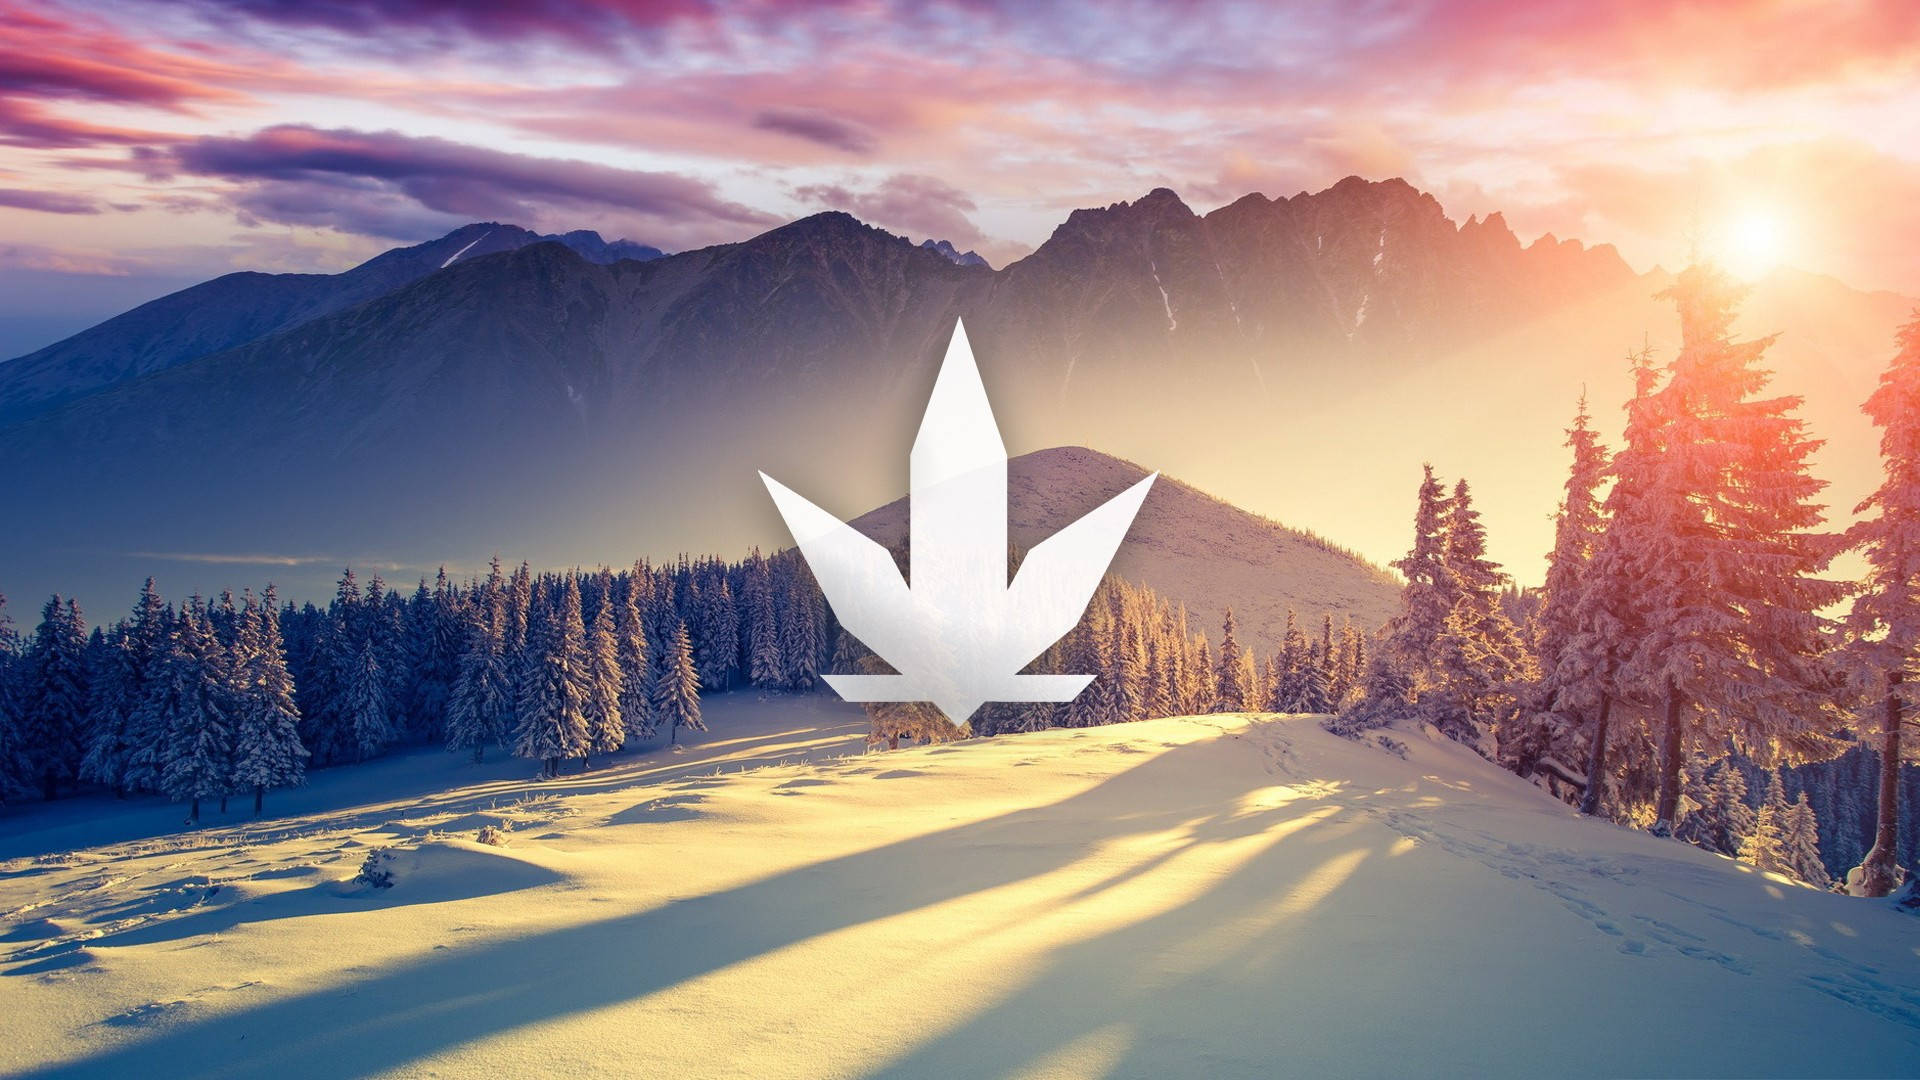 420 Weed On Snowy Landscape Wallpaper